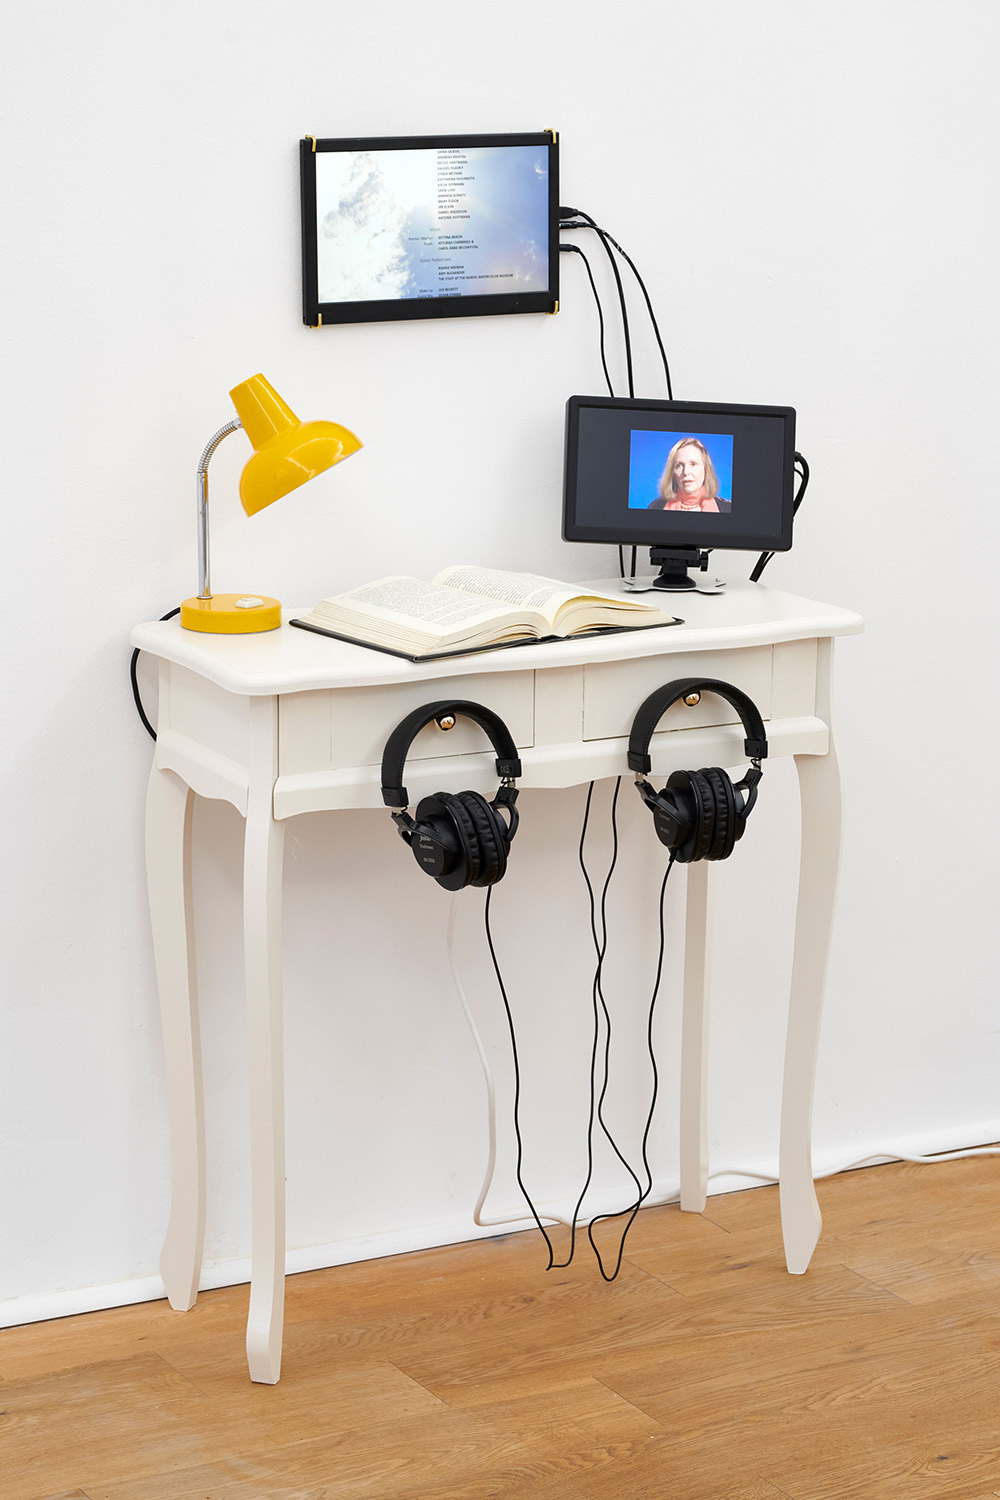 Sonja Nilsson, See me, be Her, 2015. Desk, screens, book, lamp, headphones, 4 min. 130 x 76 x 39 cm